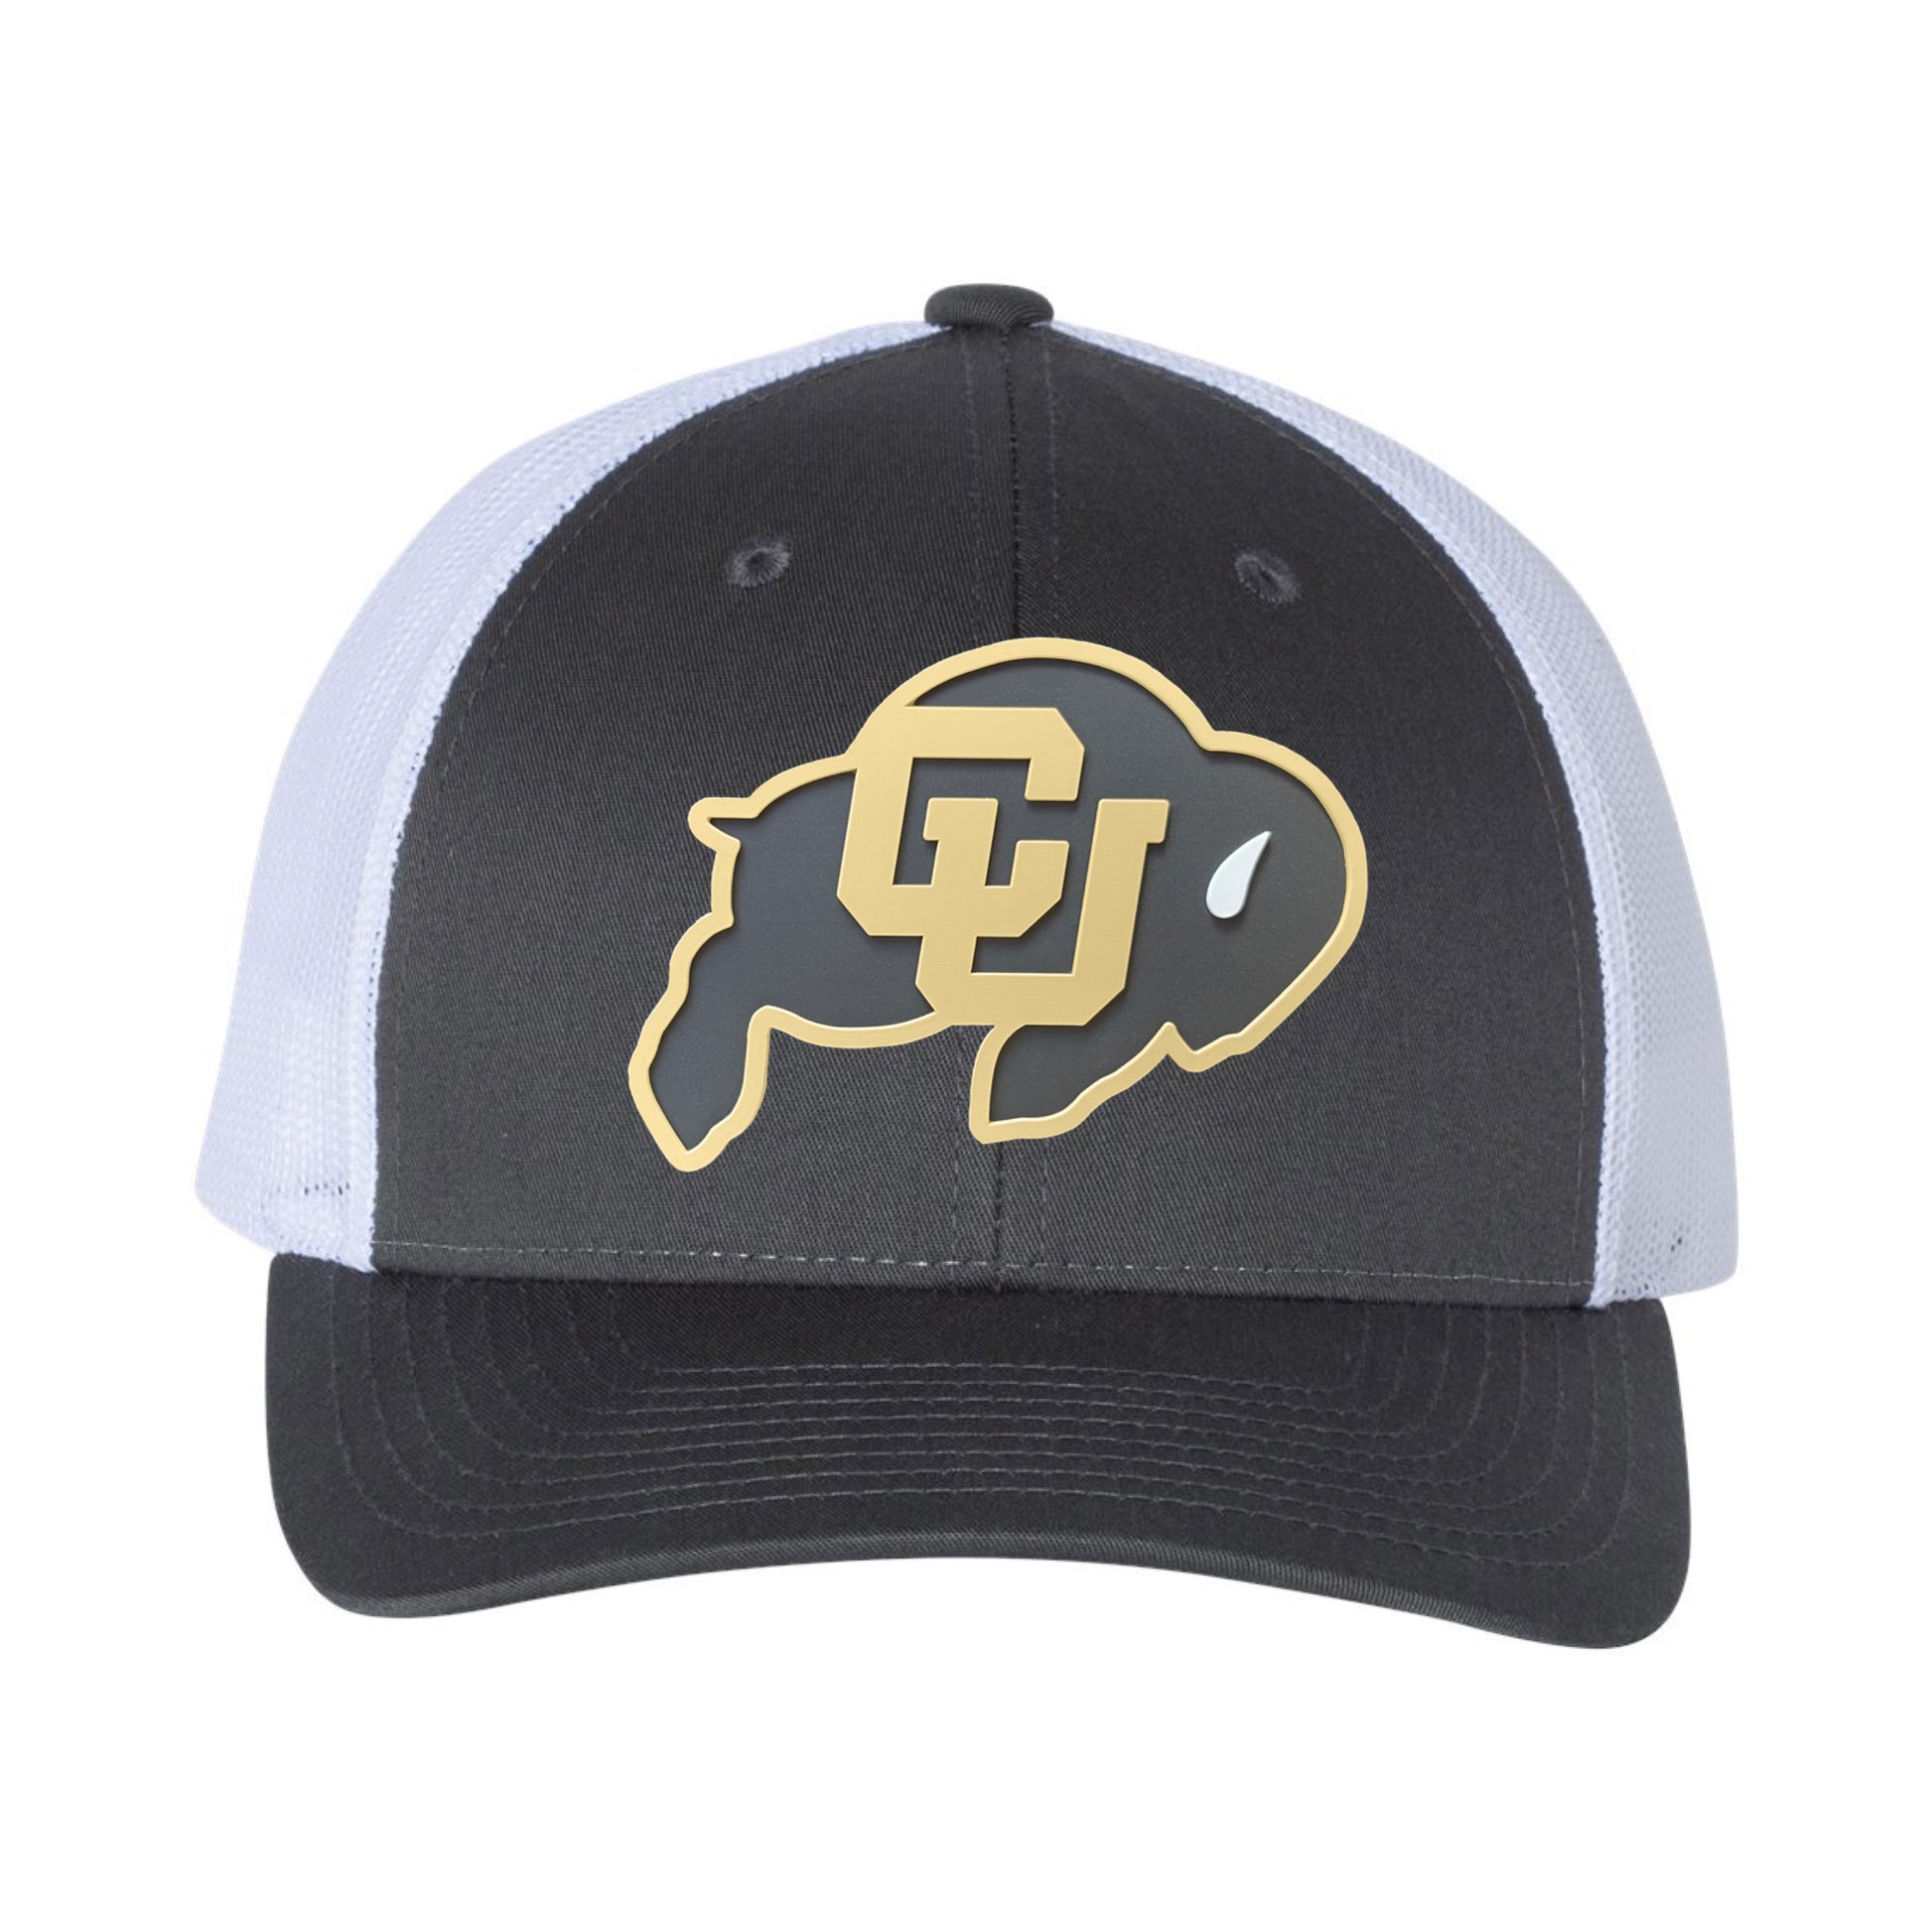 Colorado Buffaloes 3D Snapback Trucker Hat- Charcoal/ White - Ten Gallon Hat Co.